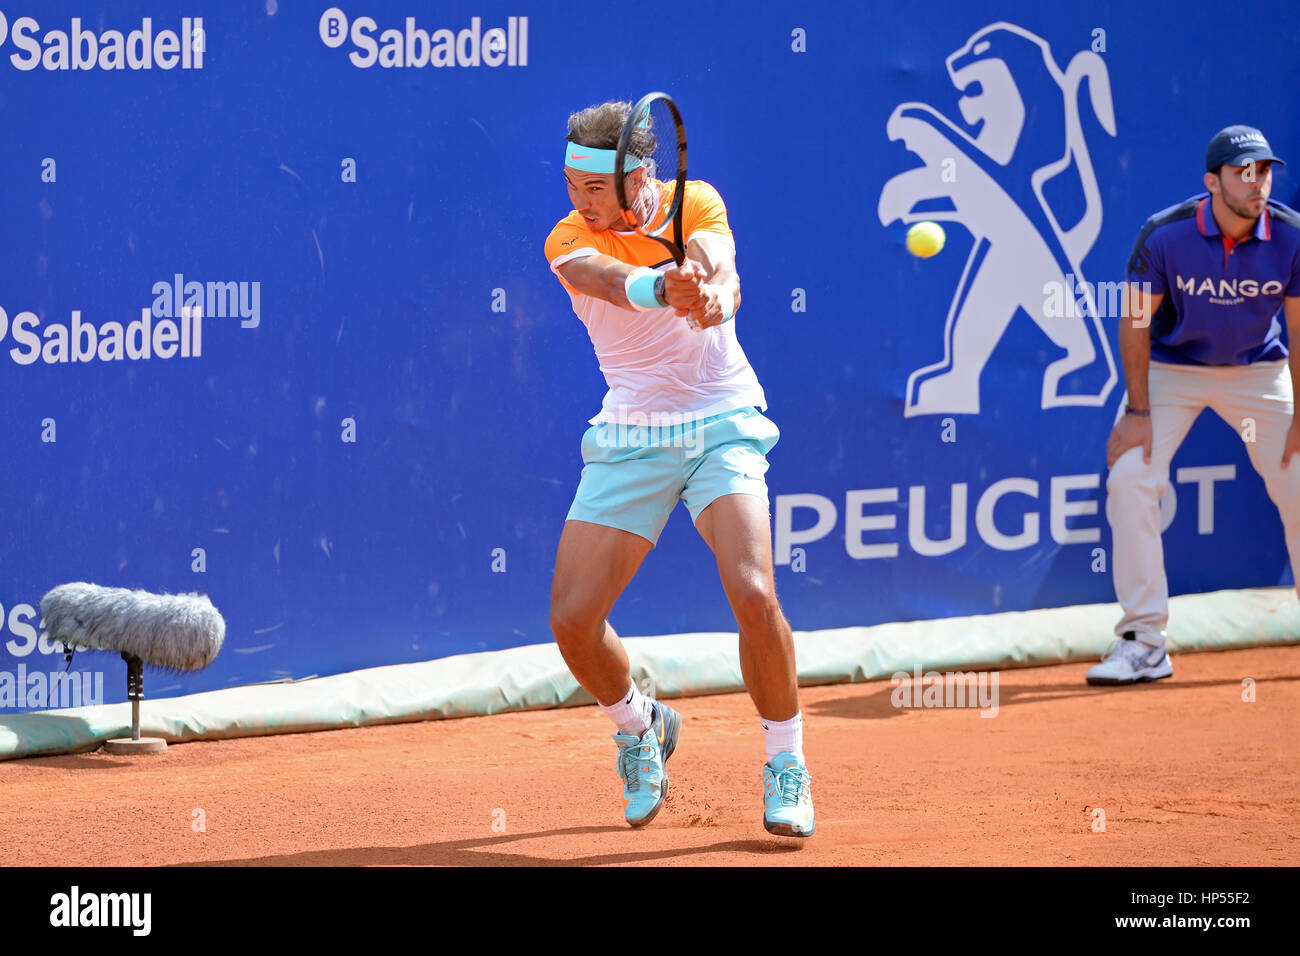 BARCELONA - 22 APR: Rafa Nadal (spanischer Tennisspieler) spielt bei der ATP Barcelona Open Banc Sabadell Conde de Godo-Turnier. Stockfoto